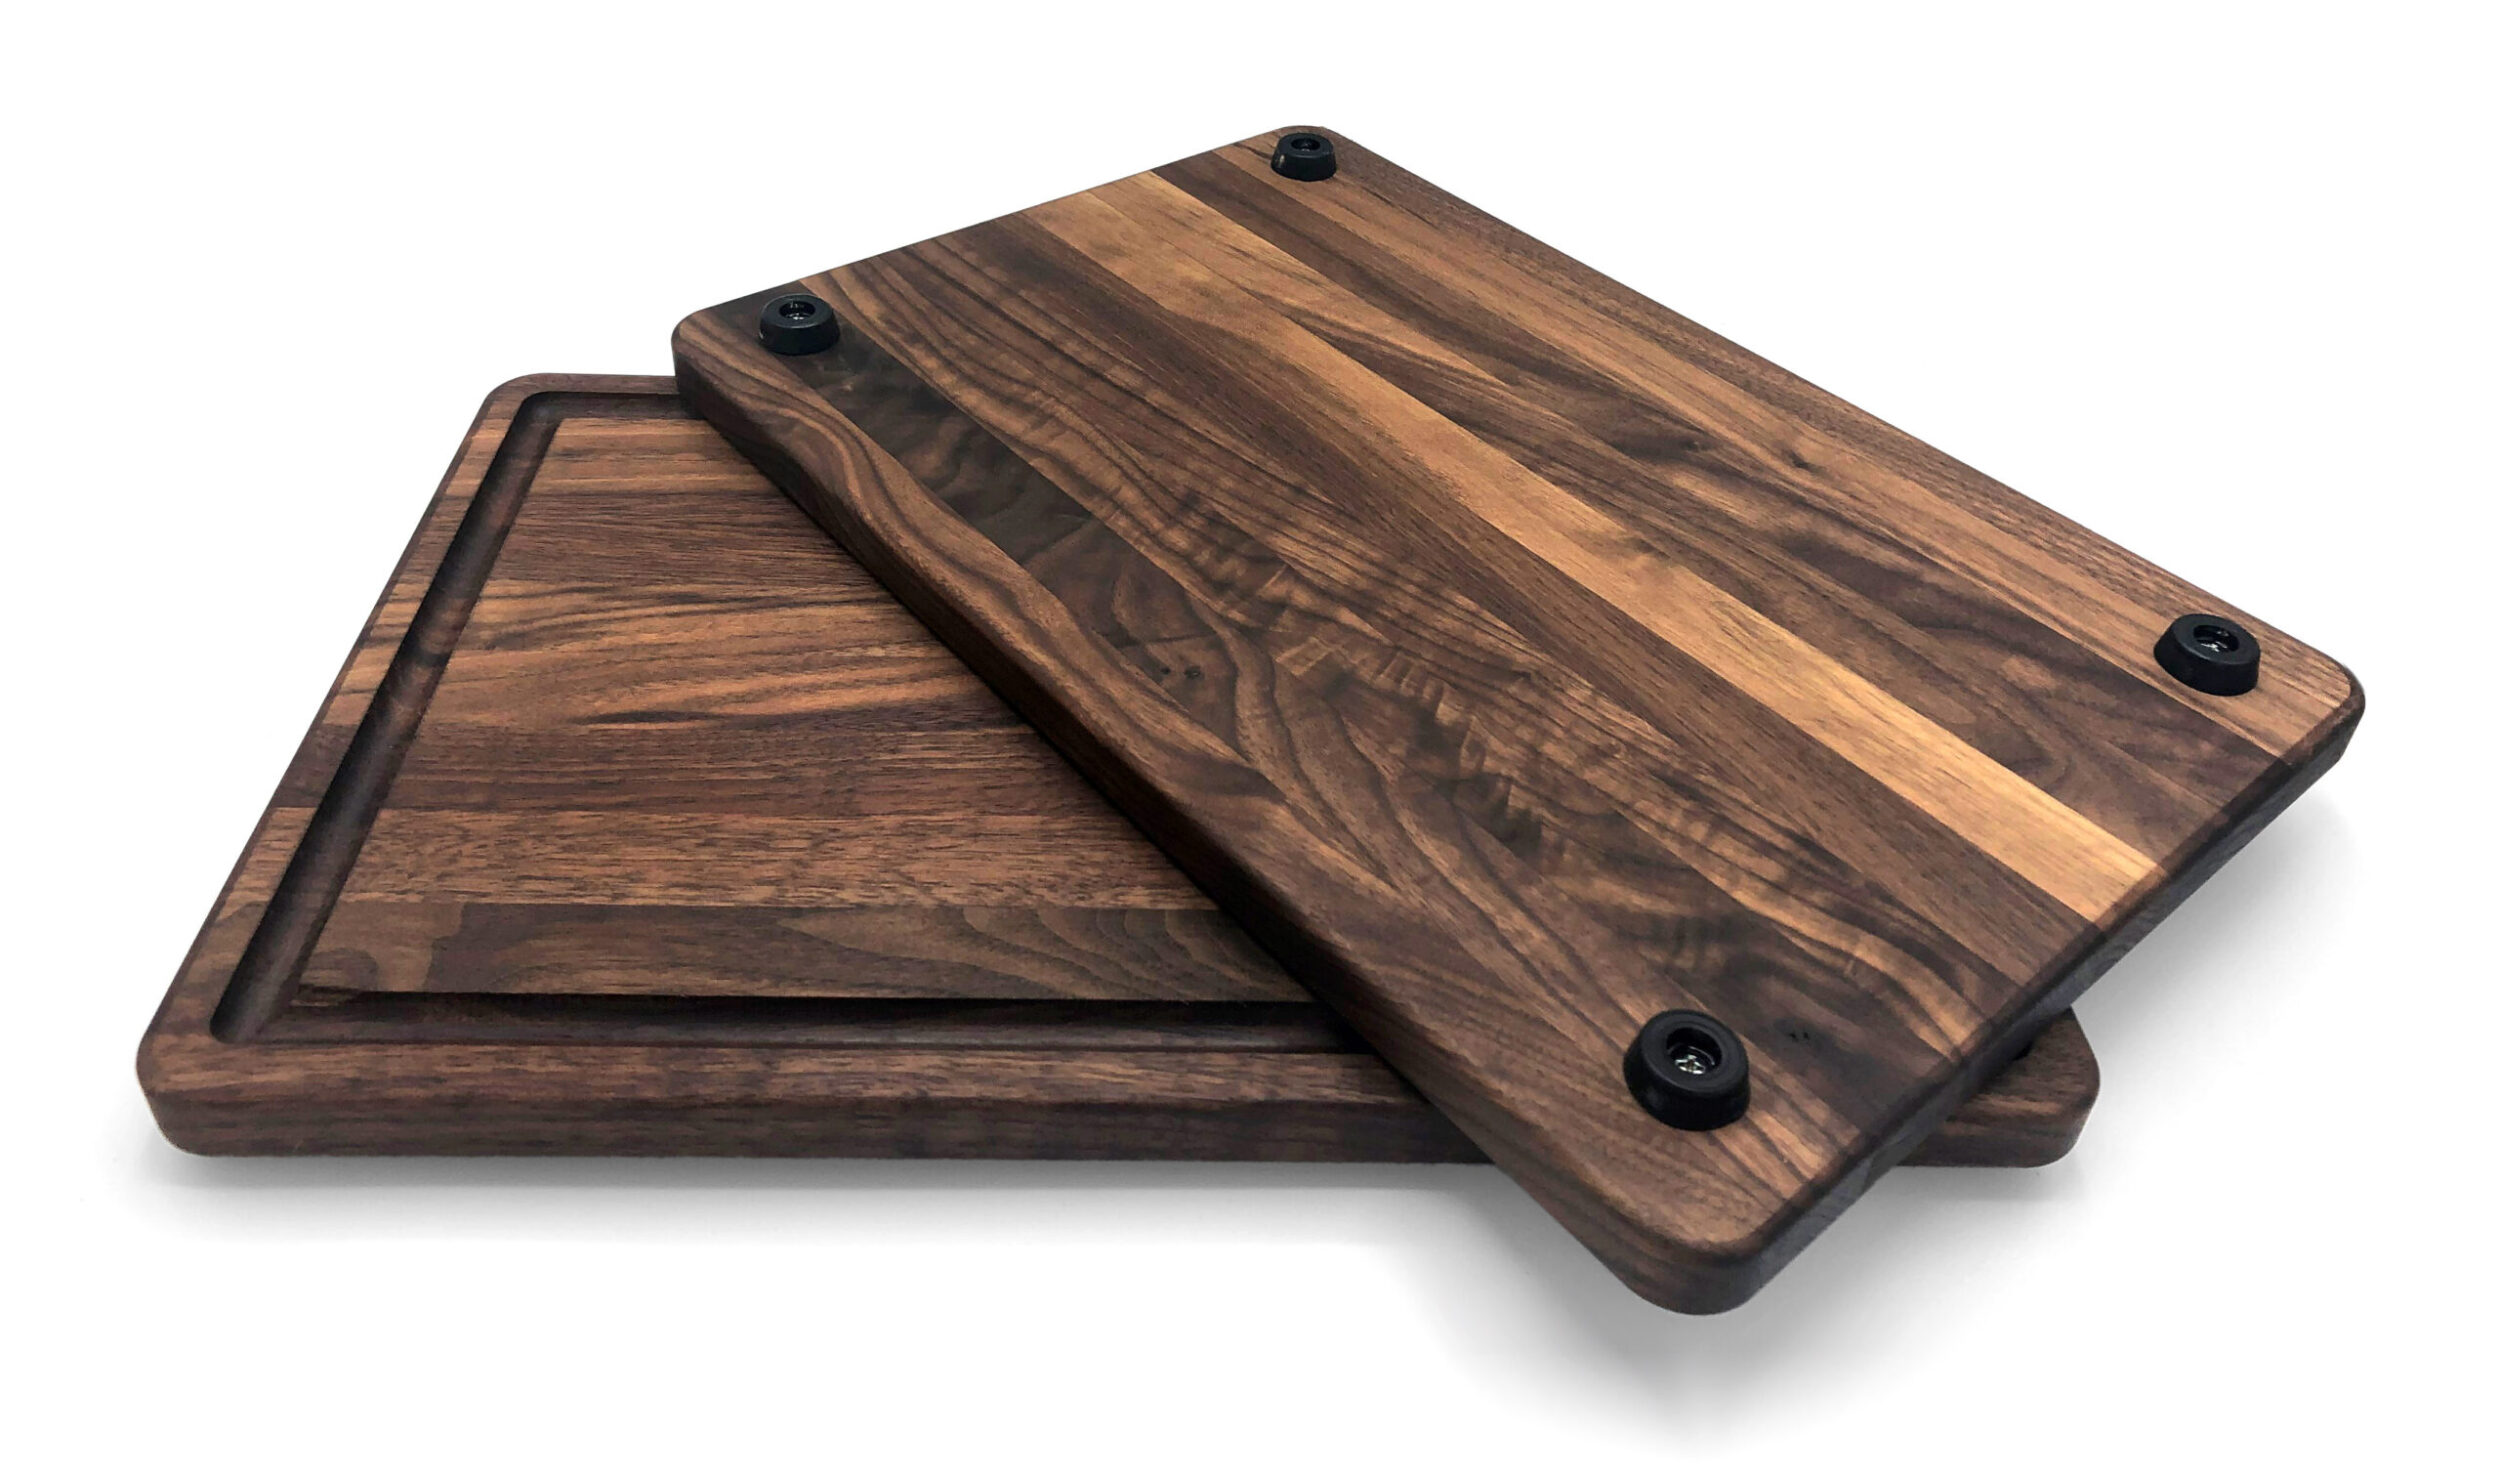 Solid Walnut Cutting Board - Moslow Wood Products (Virginia)